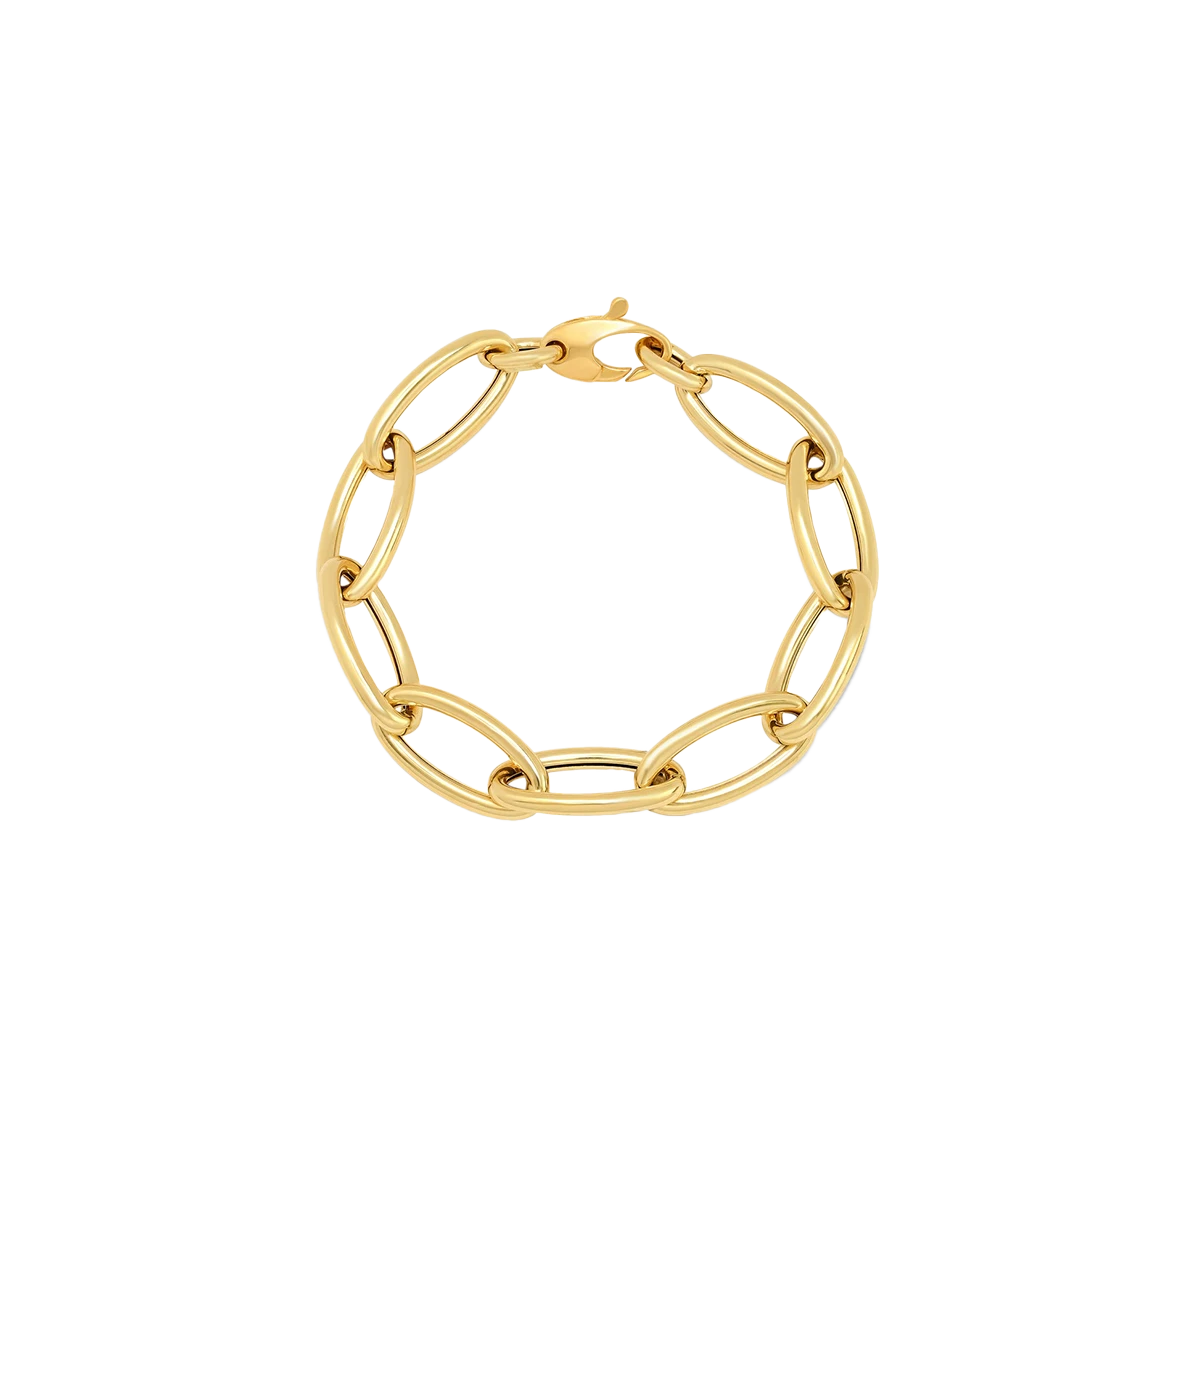 Jumbo Link Bracelet in 14k Yellow Gold